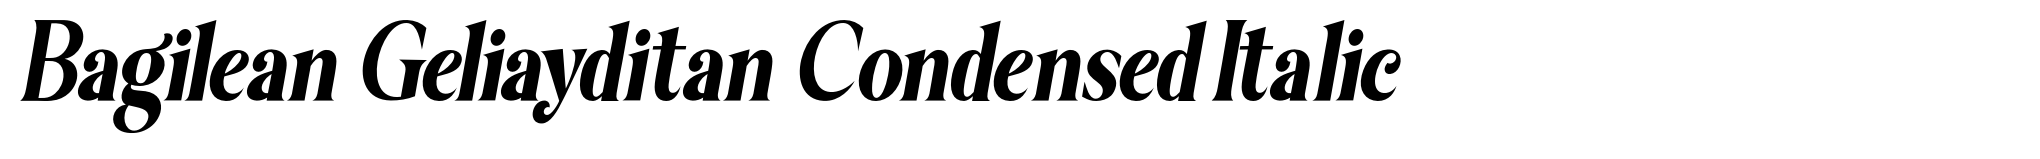 Bagilean Geliayditan Condensed Italic image